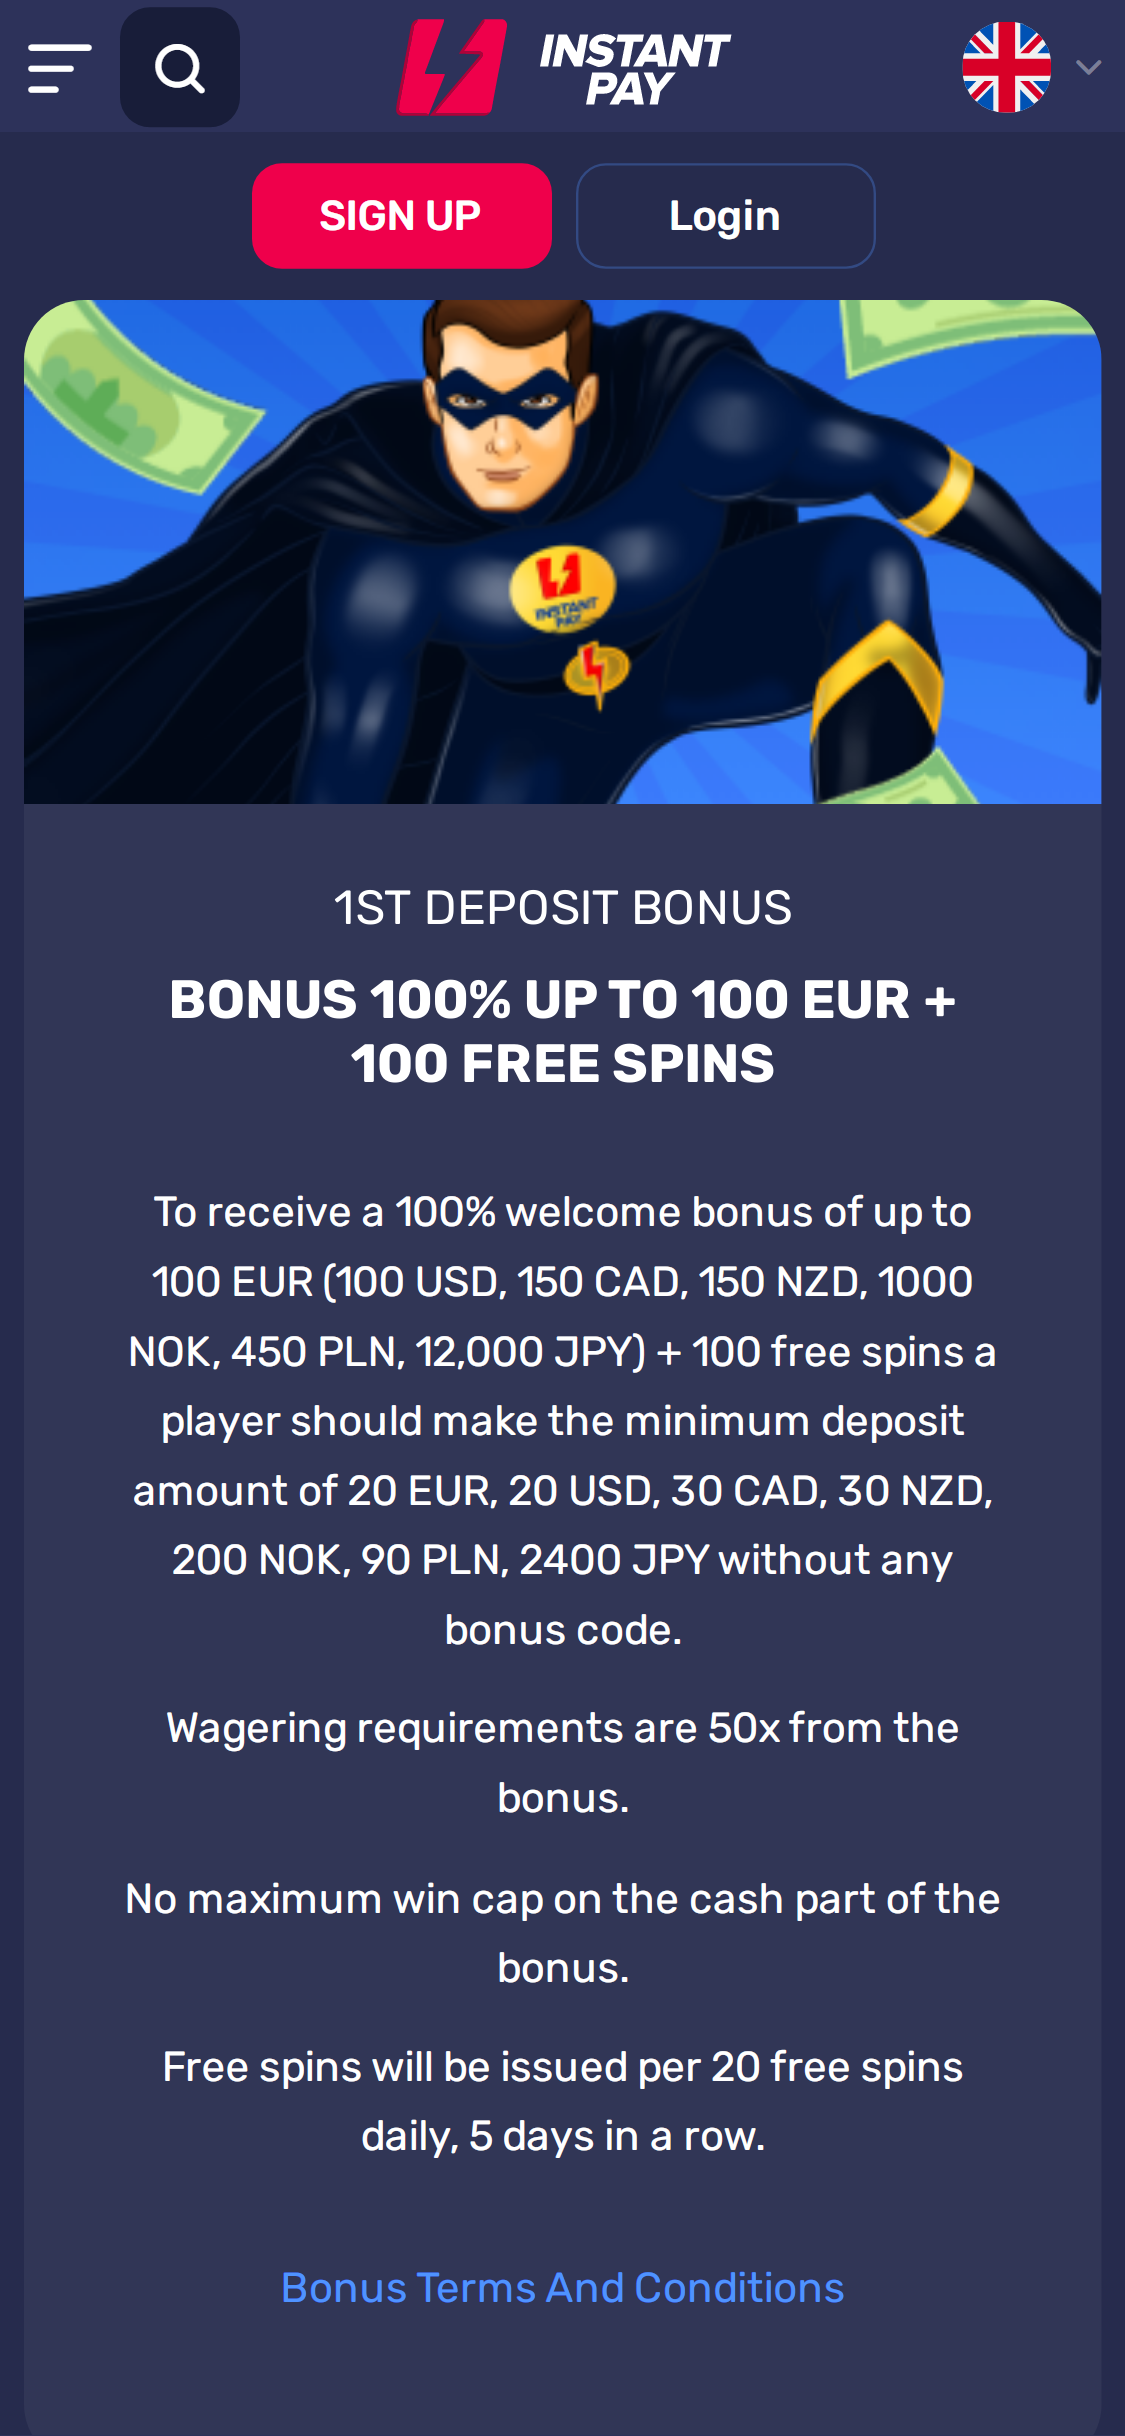 Instant Pay Casino Mobile No Deposit Bonus Review